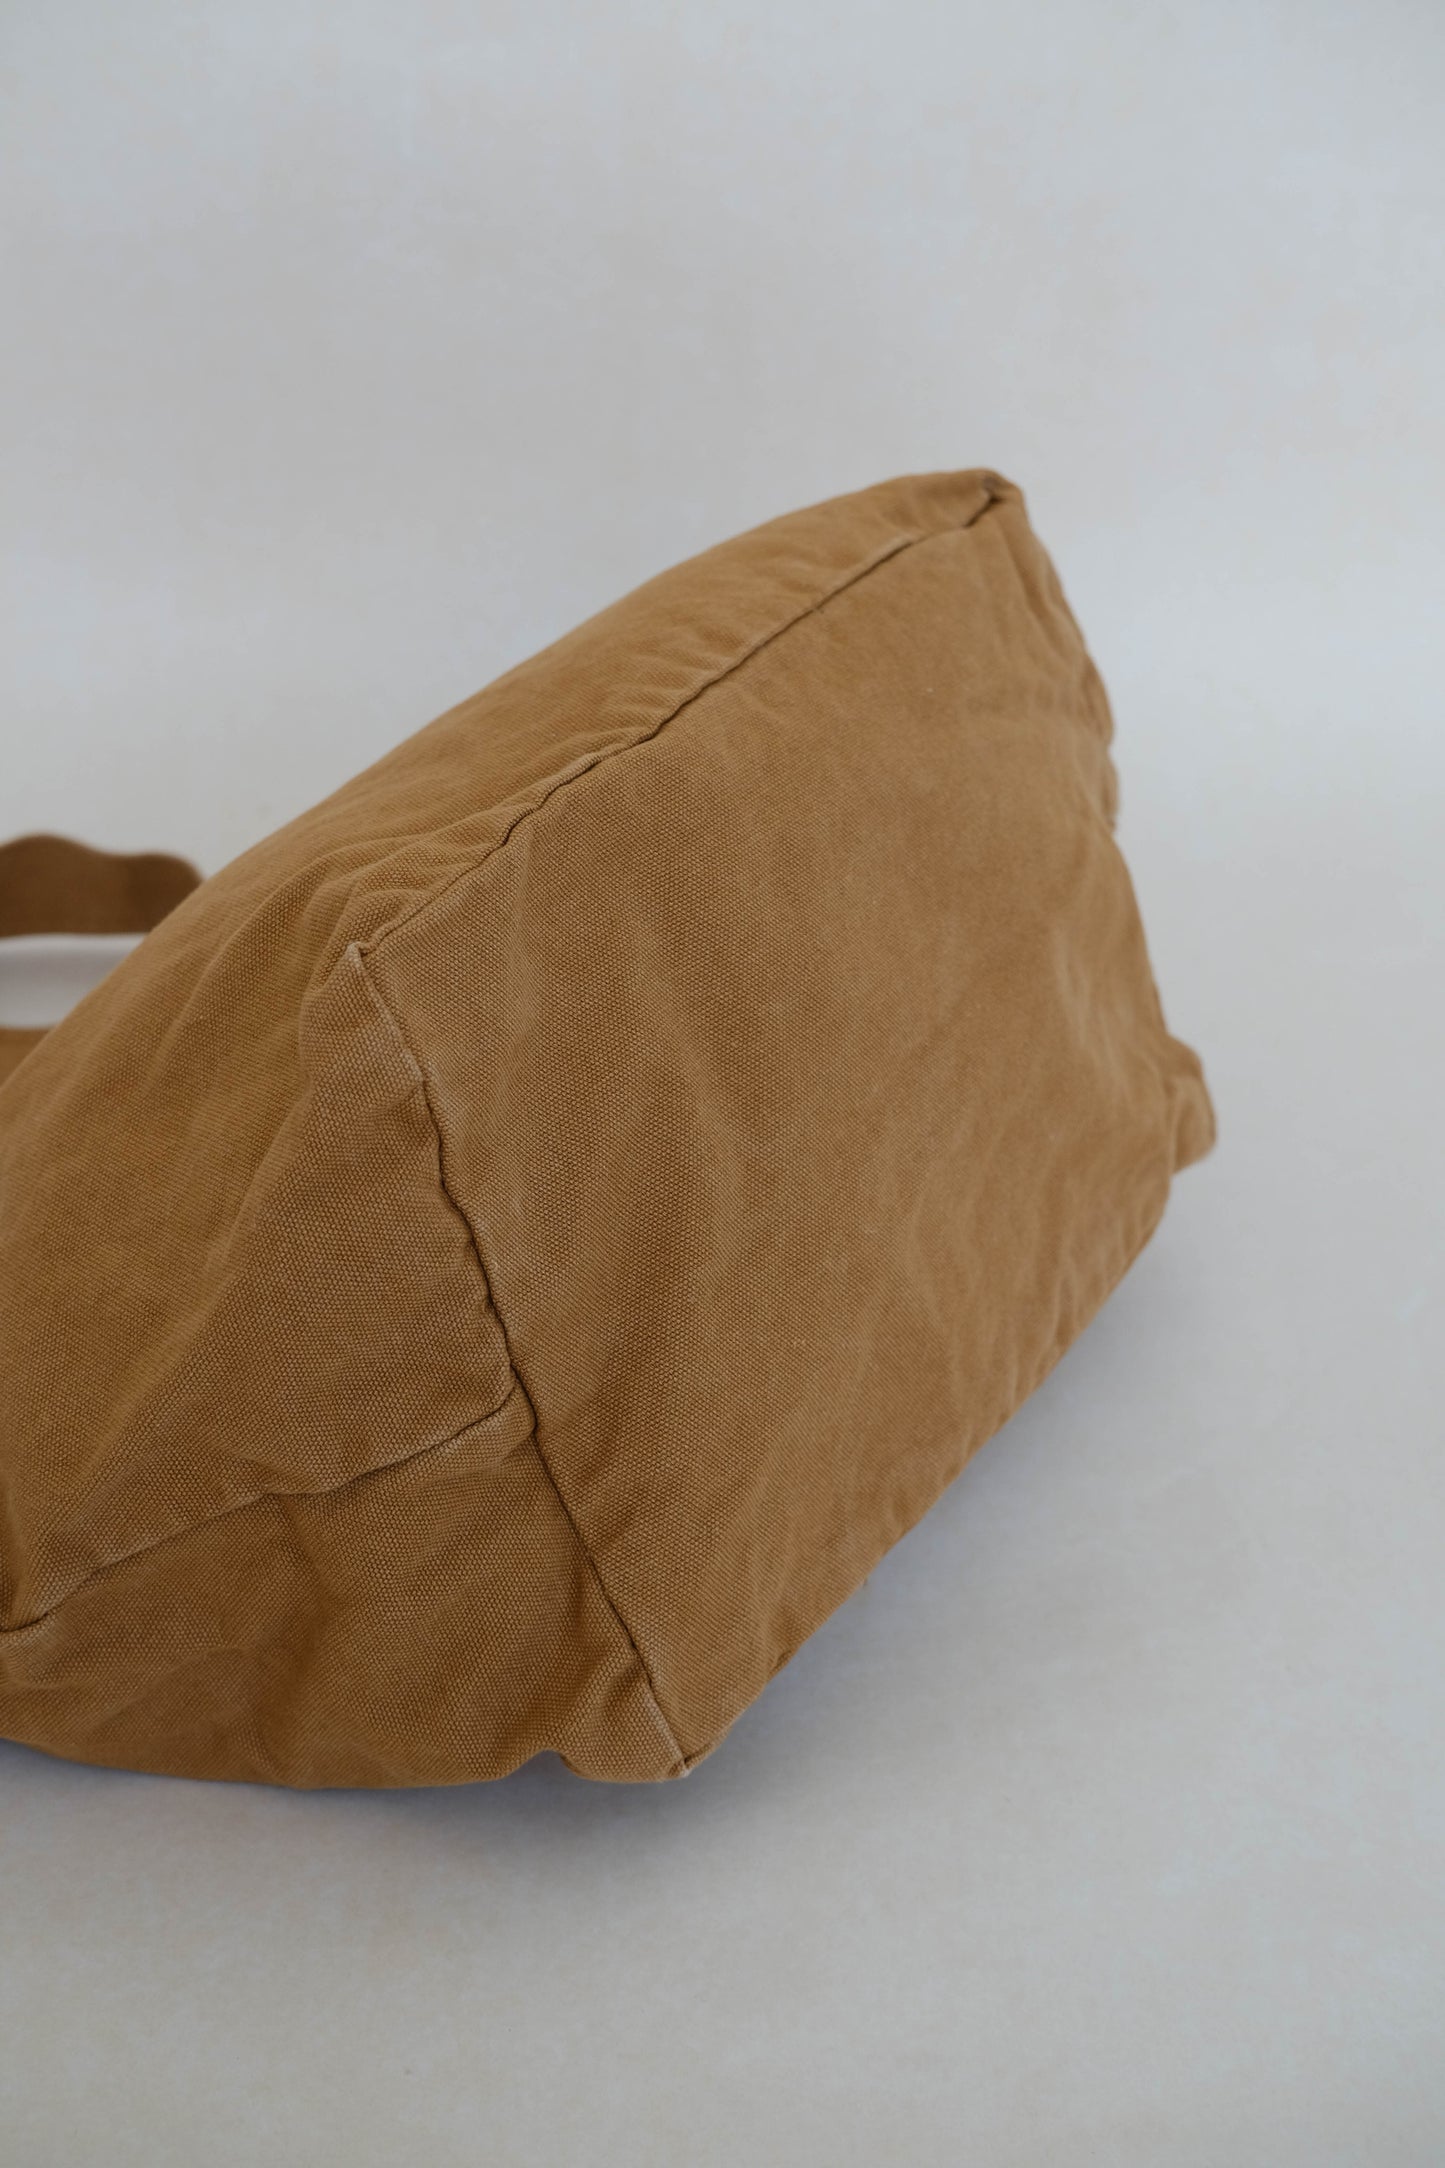 Tote shoulder bag in brown